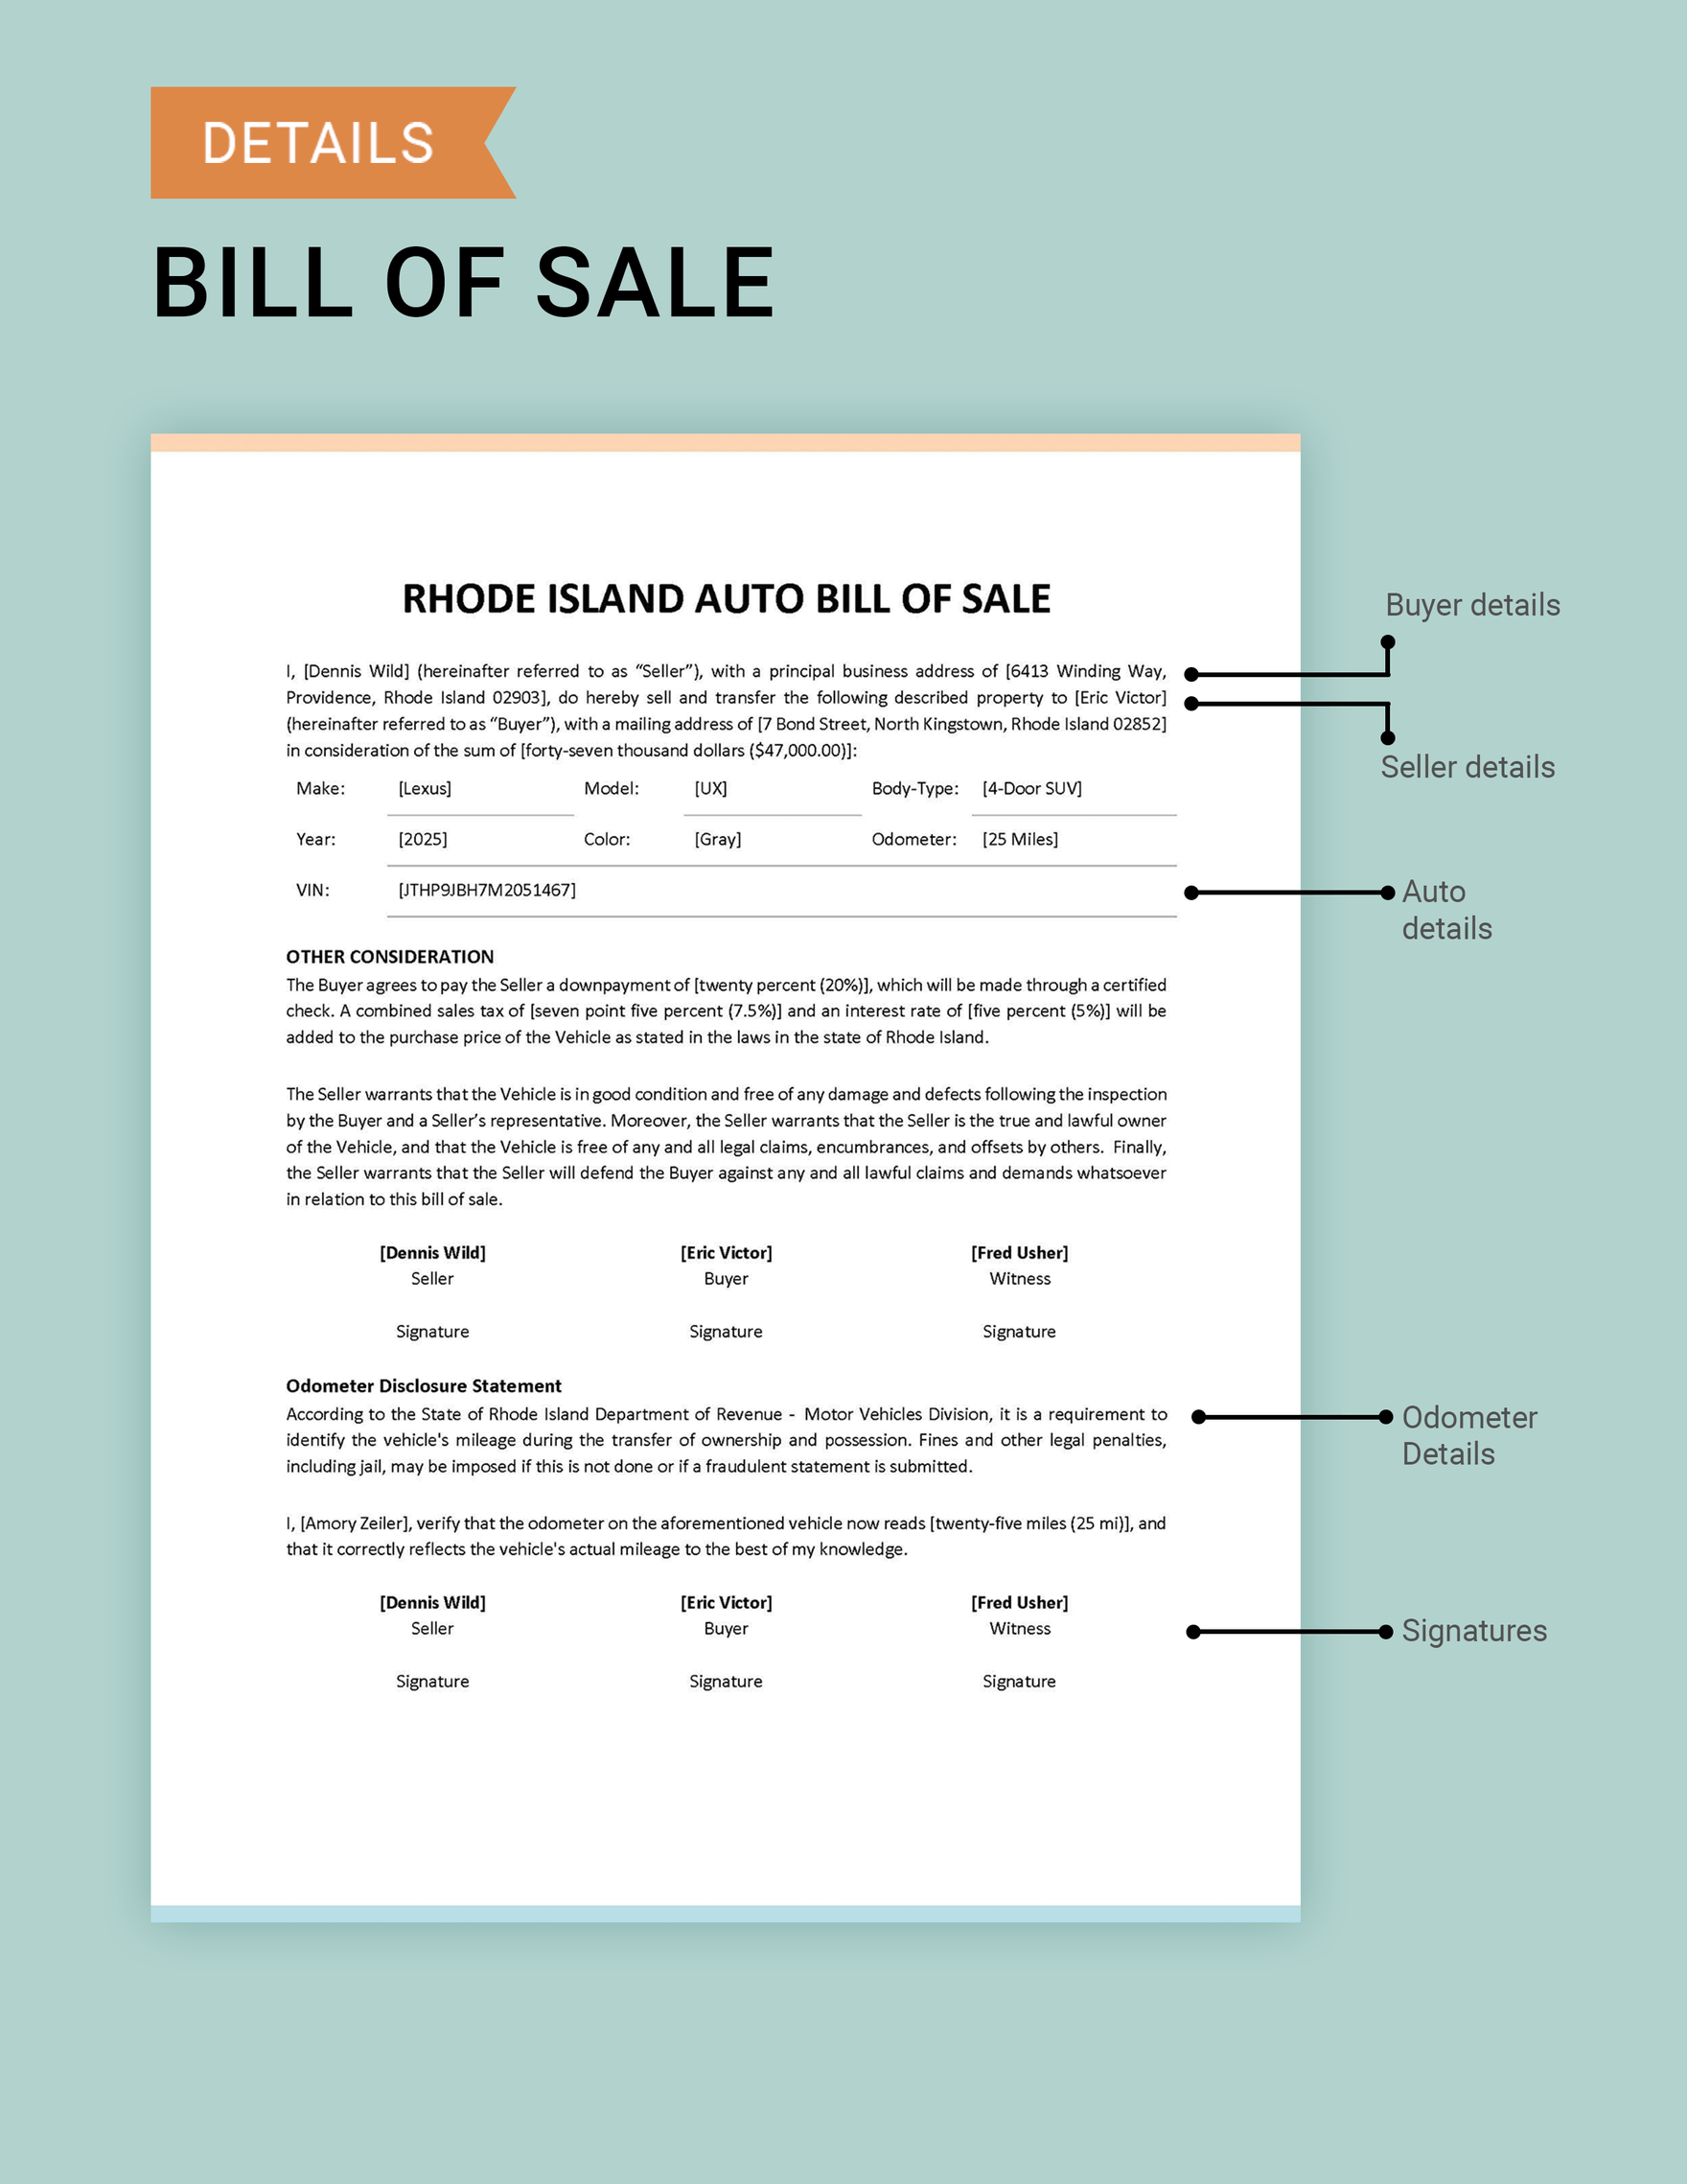 Rhode Island Auto Bill of Sale Template